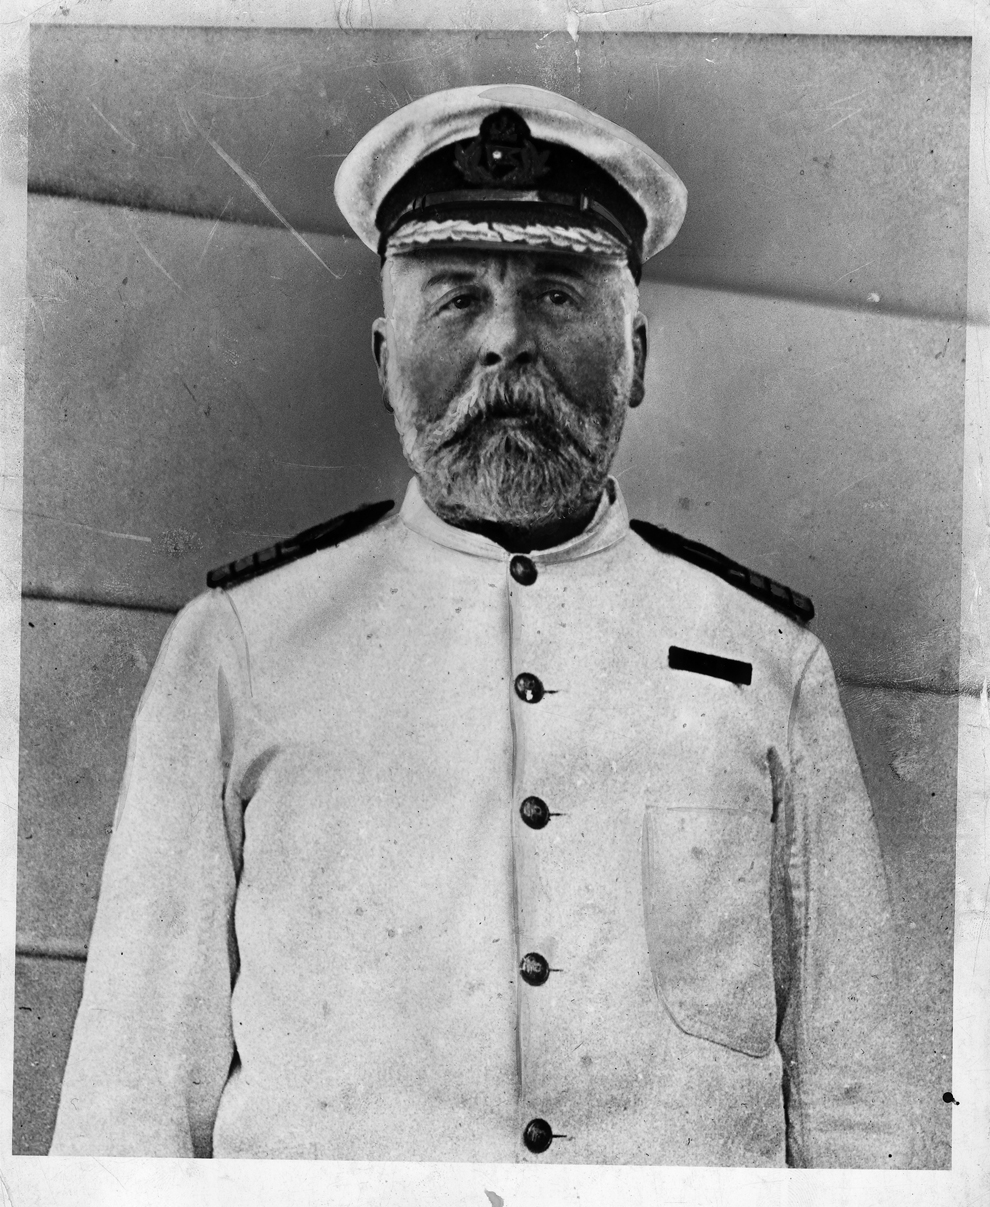 capitán del Titanic Edward Smith